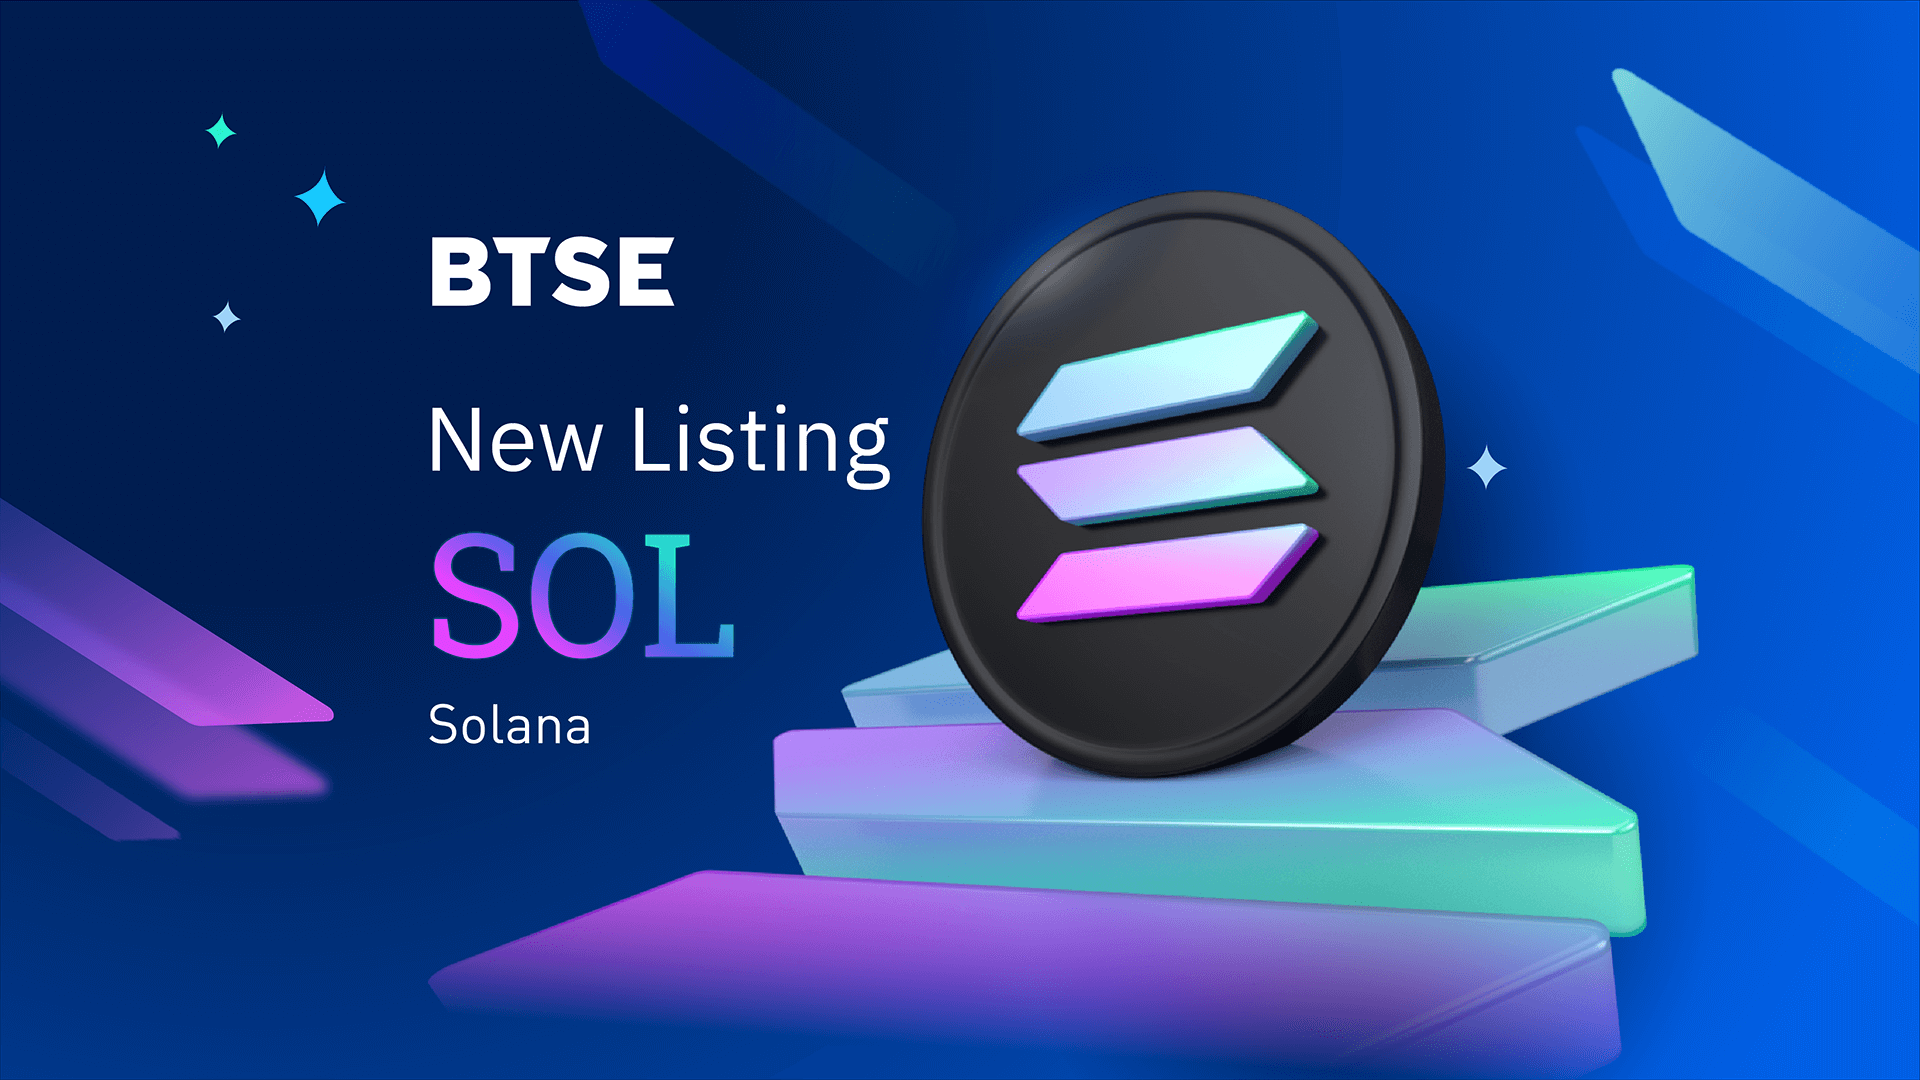 BTSE Integrates Solana Protocol, Lists SOL Token